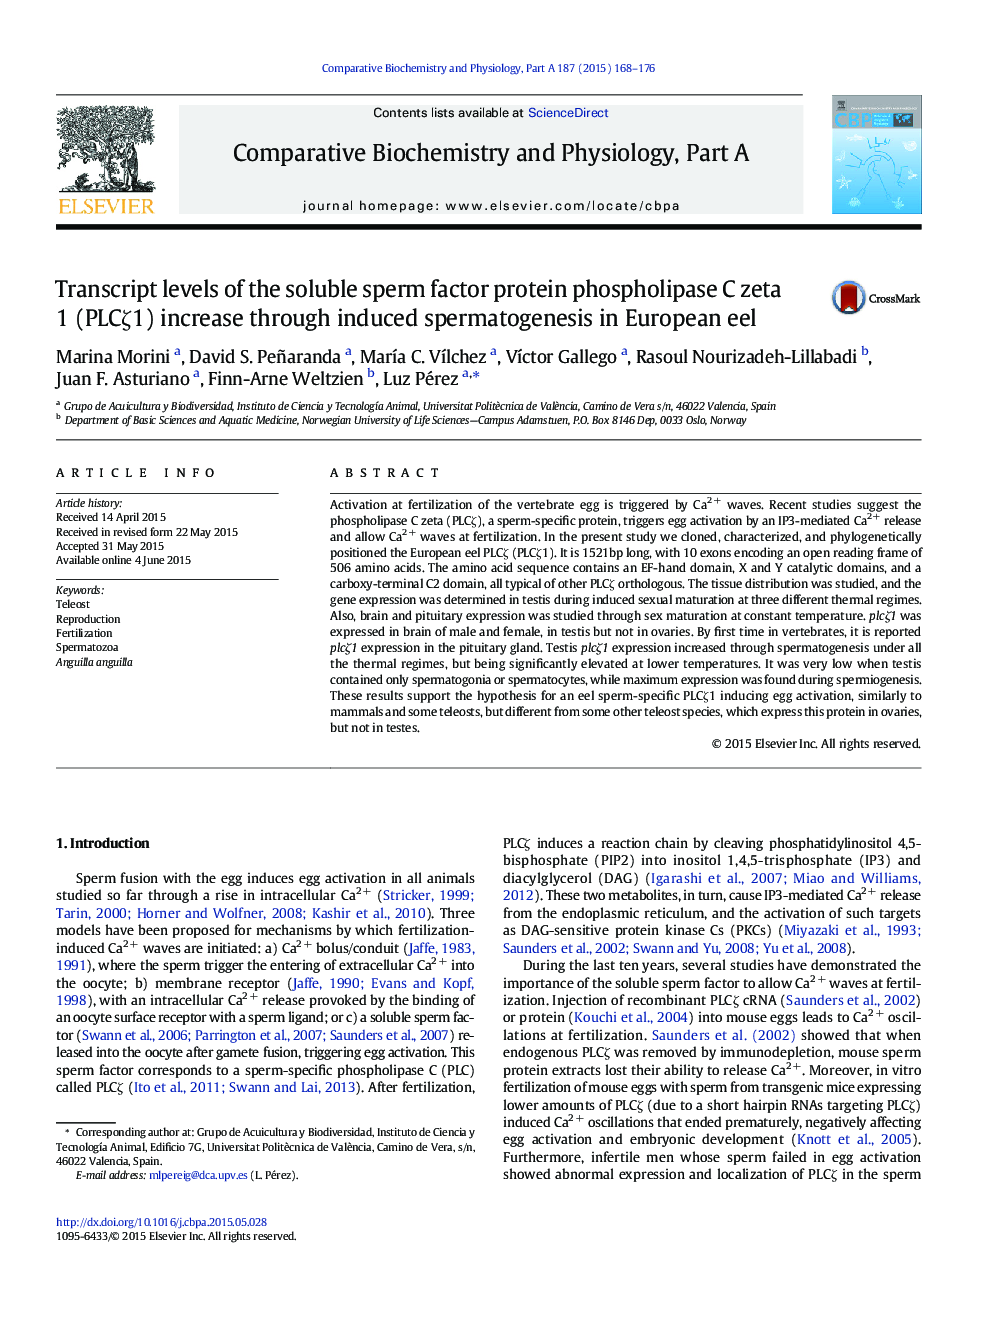 Transcript levels of the soluble sperm factor protein phospholipase C zeta 1 (PLCζ1) increase through induced spermatogenesis in European eel